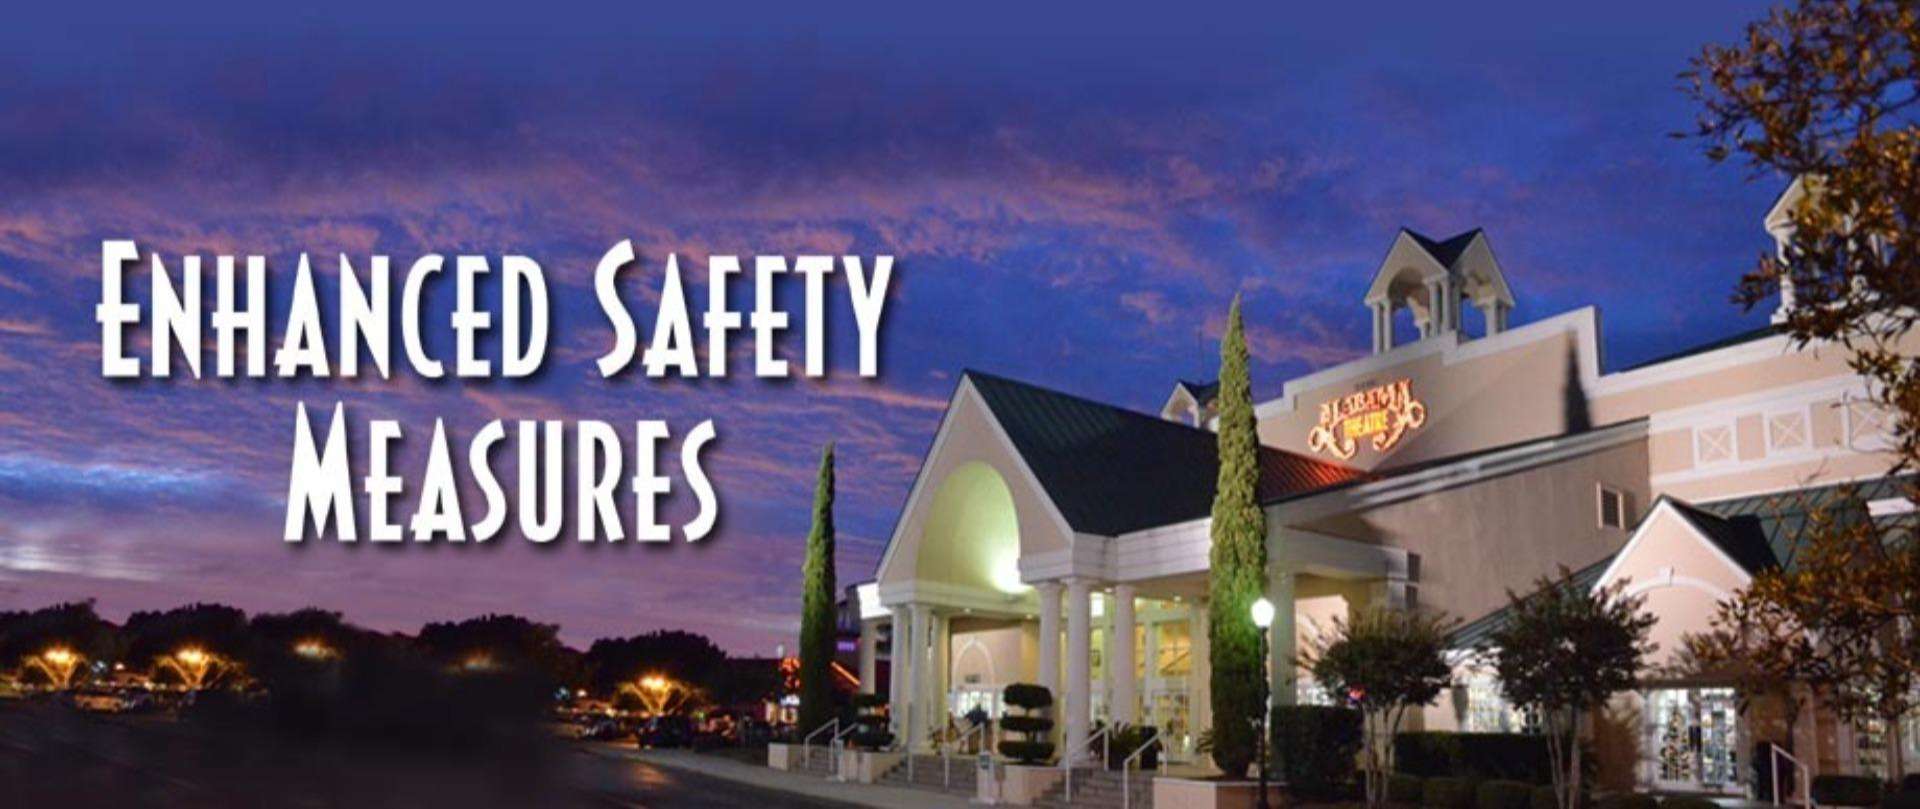 Alabama Theatre Enhance Safety